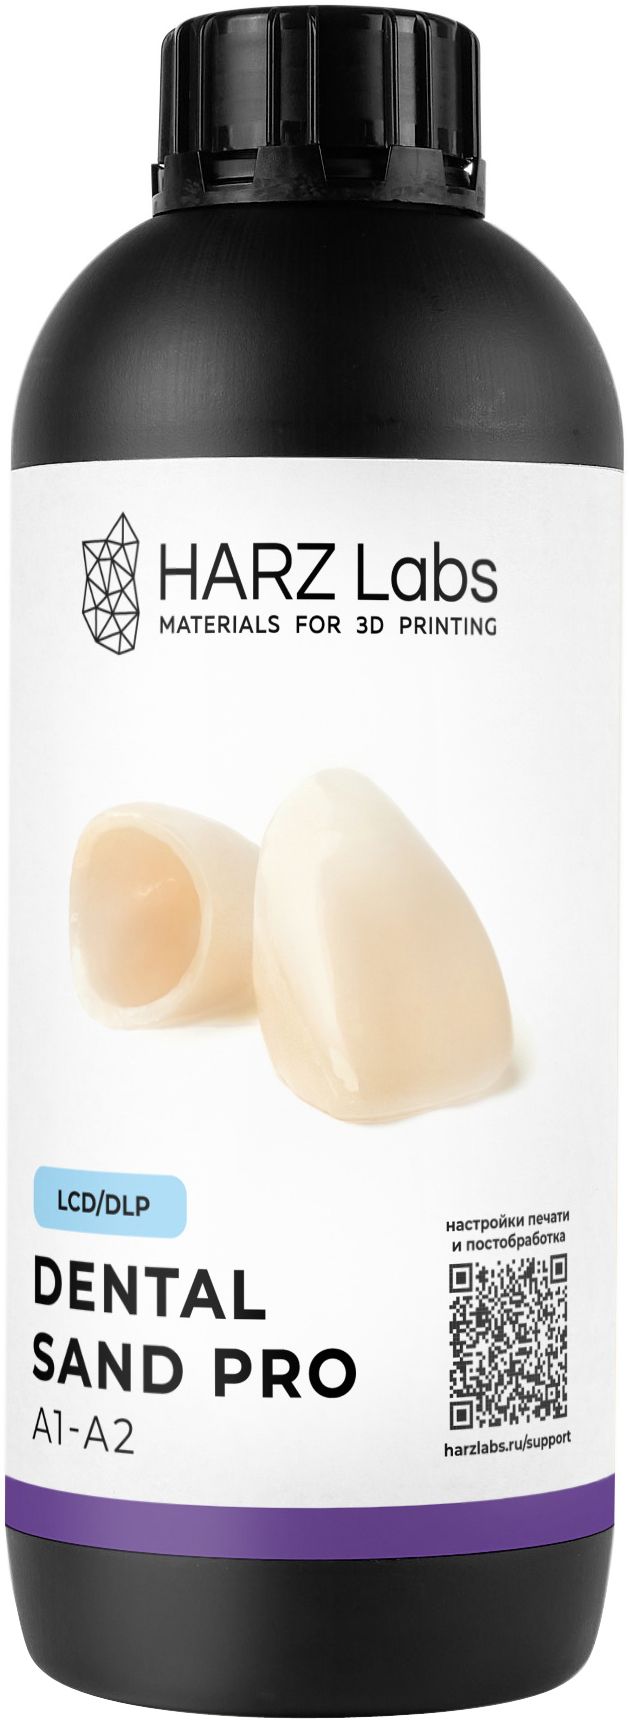 HARZ Labs Dental Sand PRO A1-2 LCD/DLP 1 л